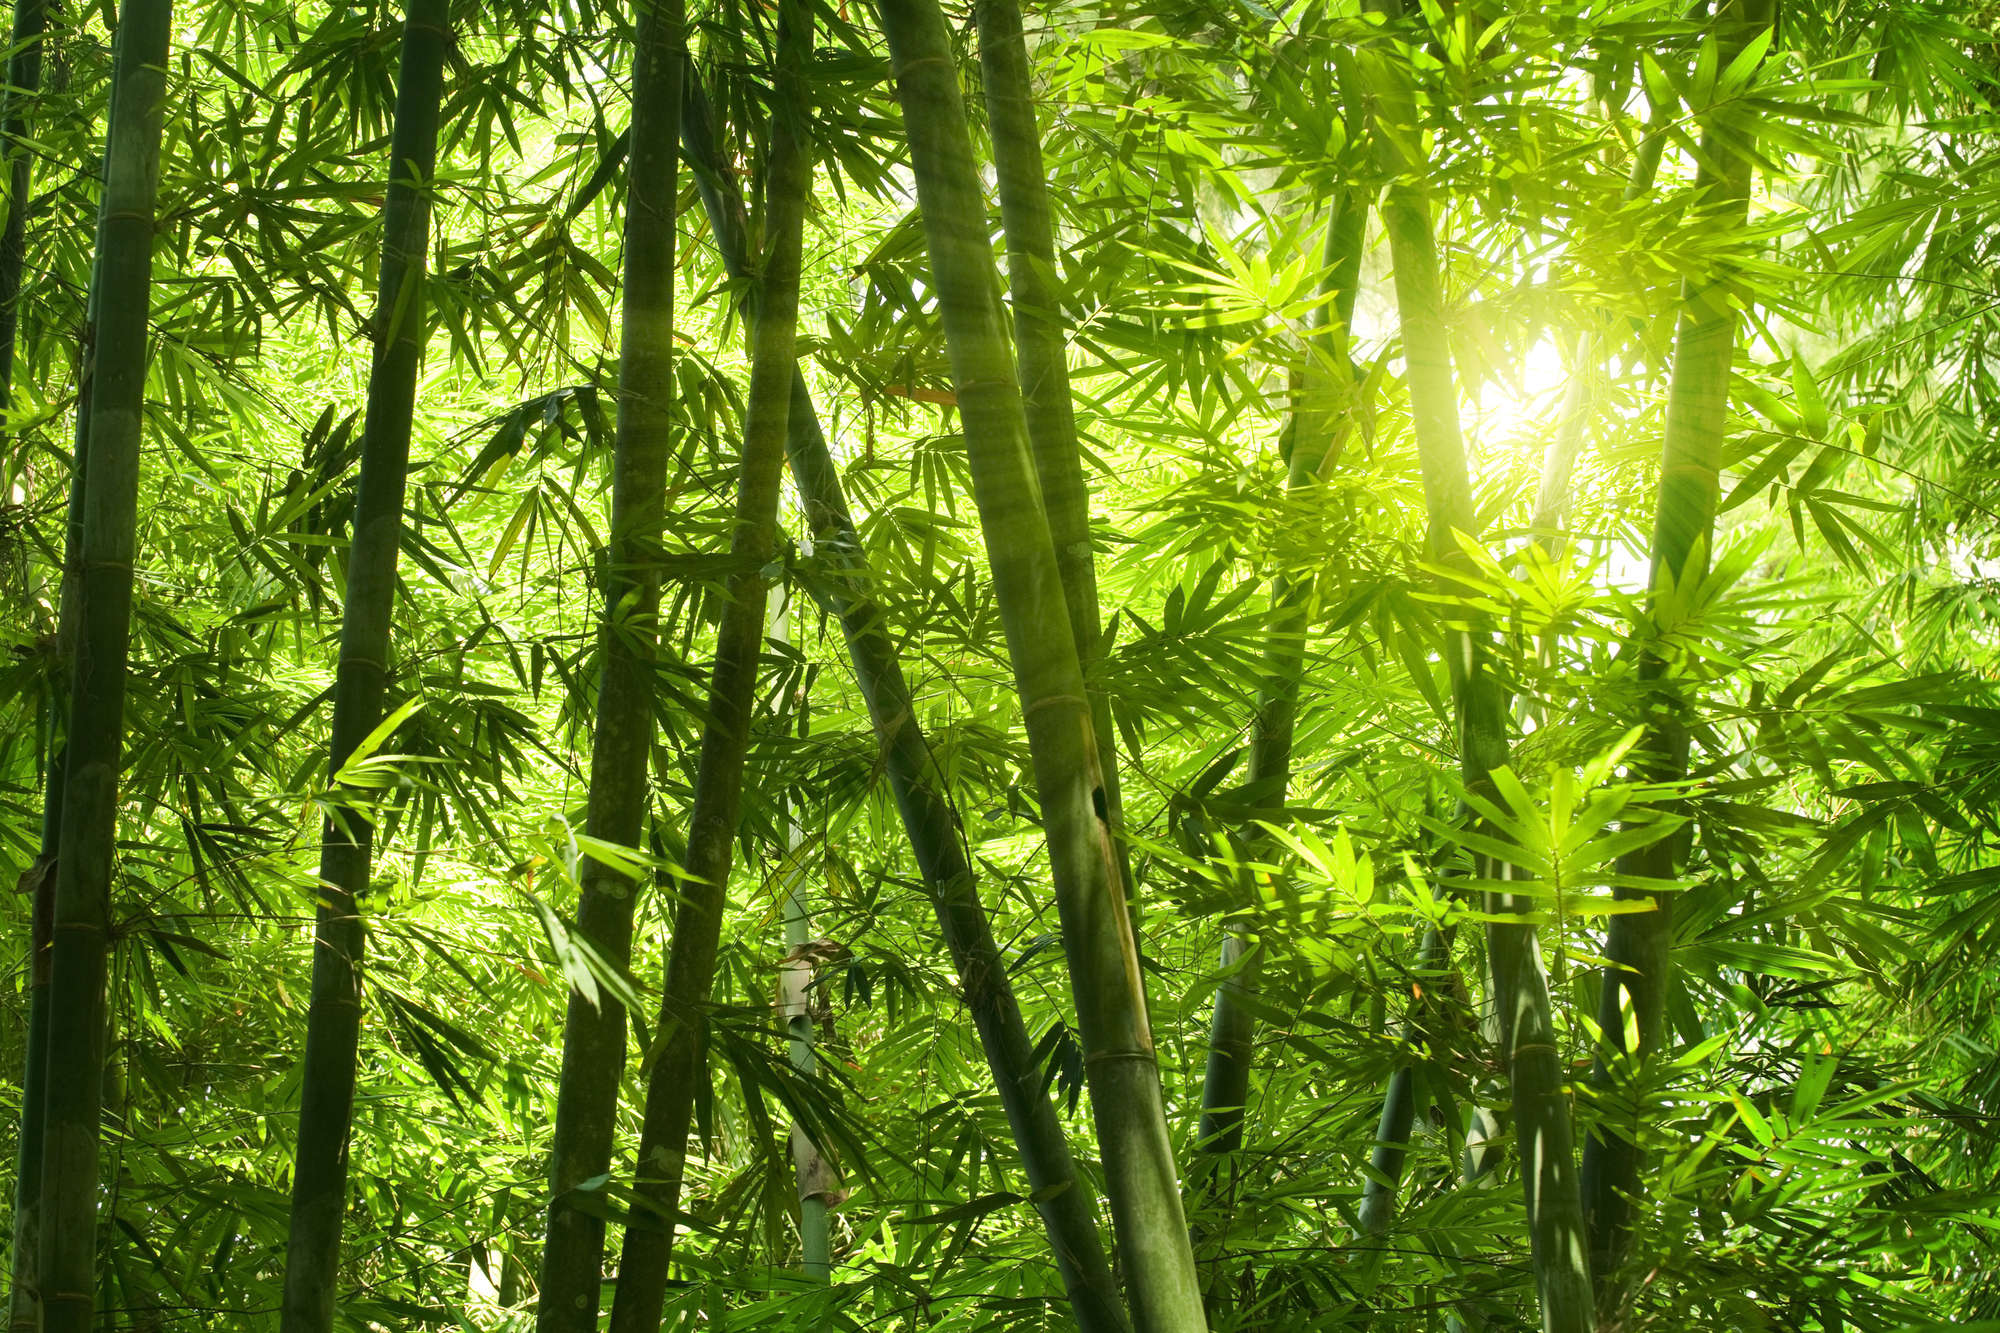             Natuurbehang bamboebos motief op structuurvlieseline
        